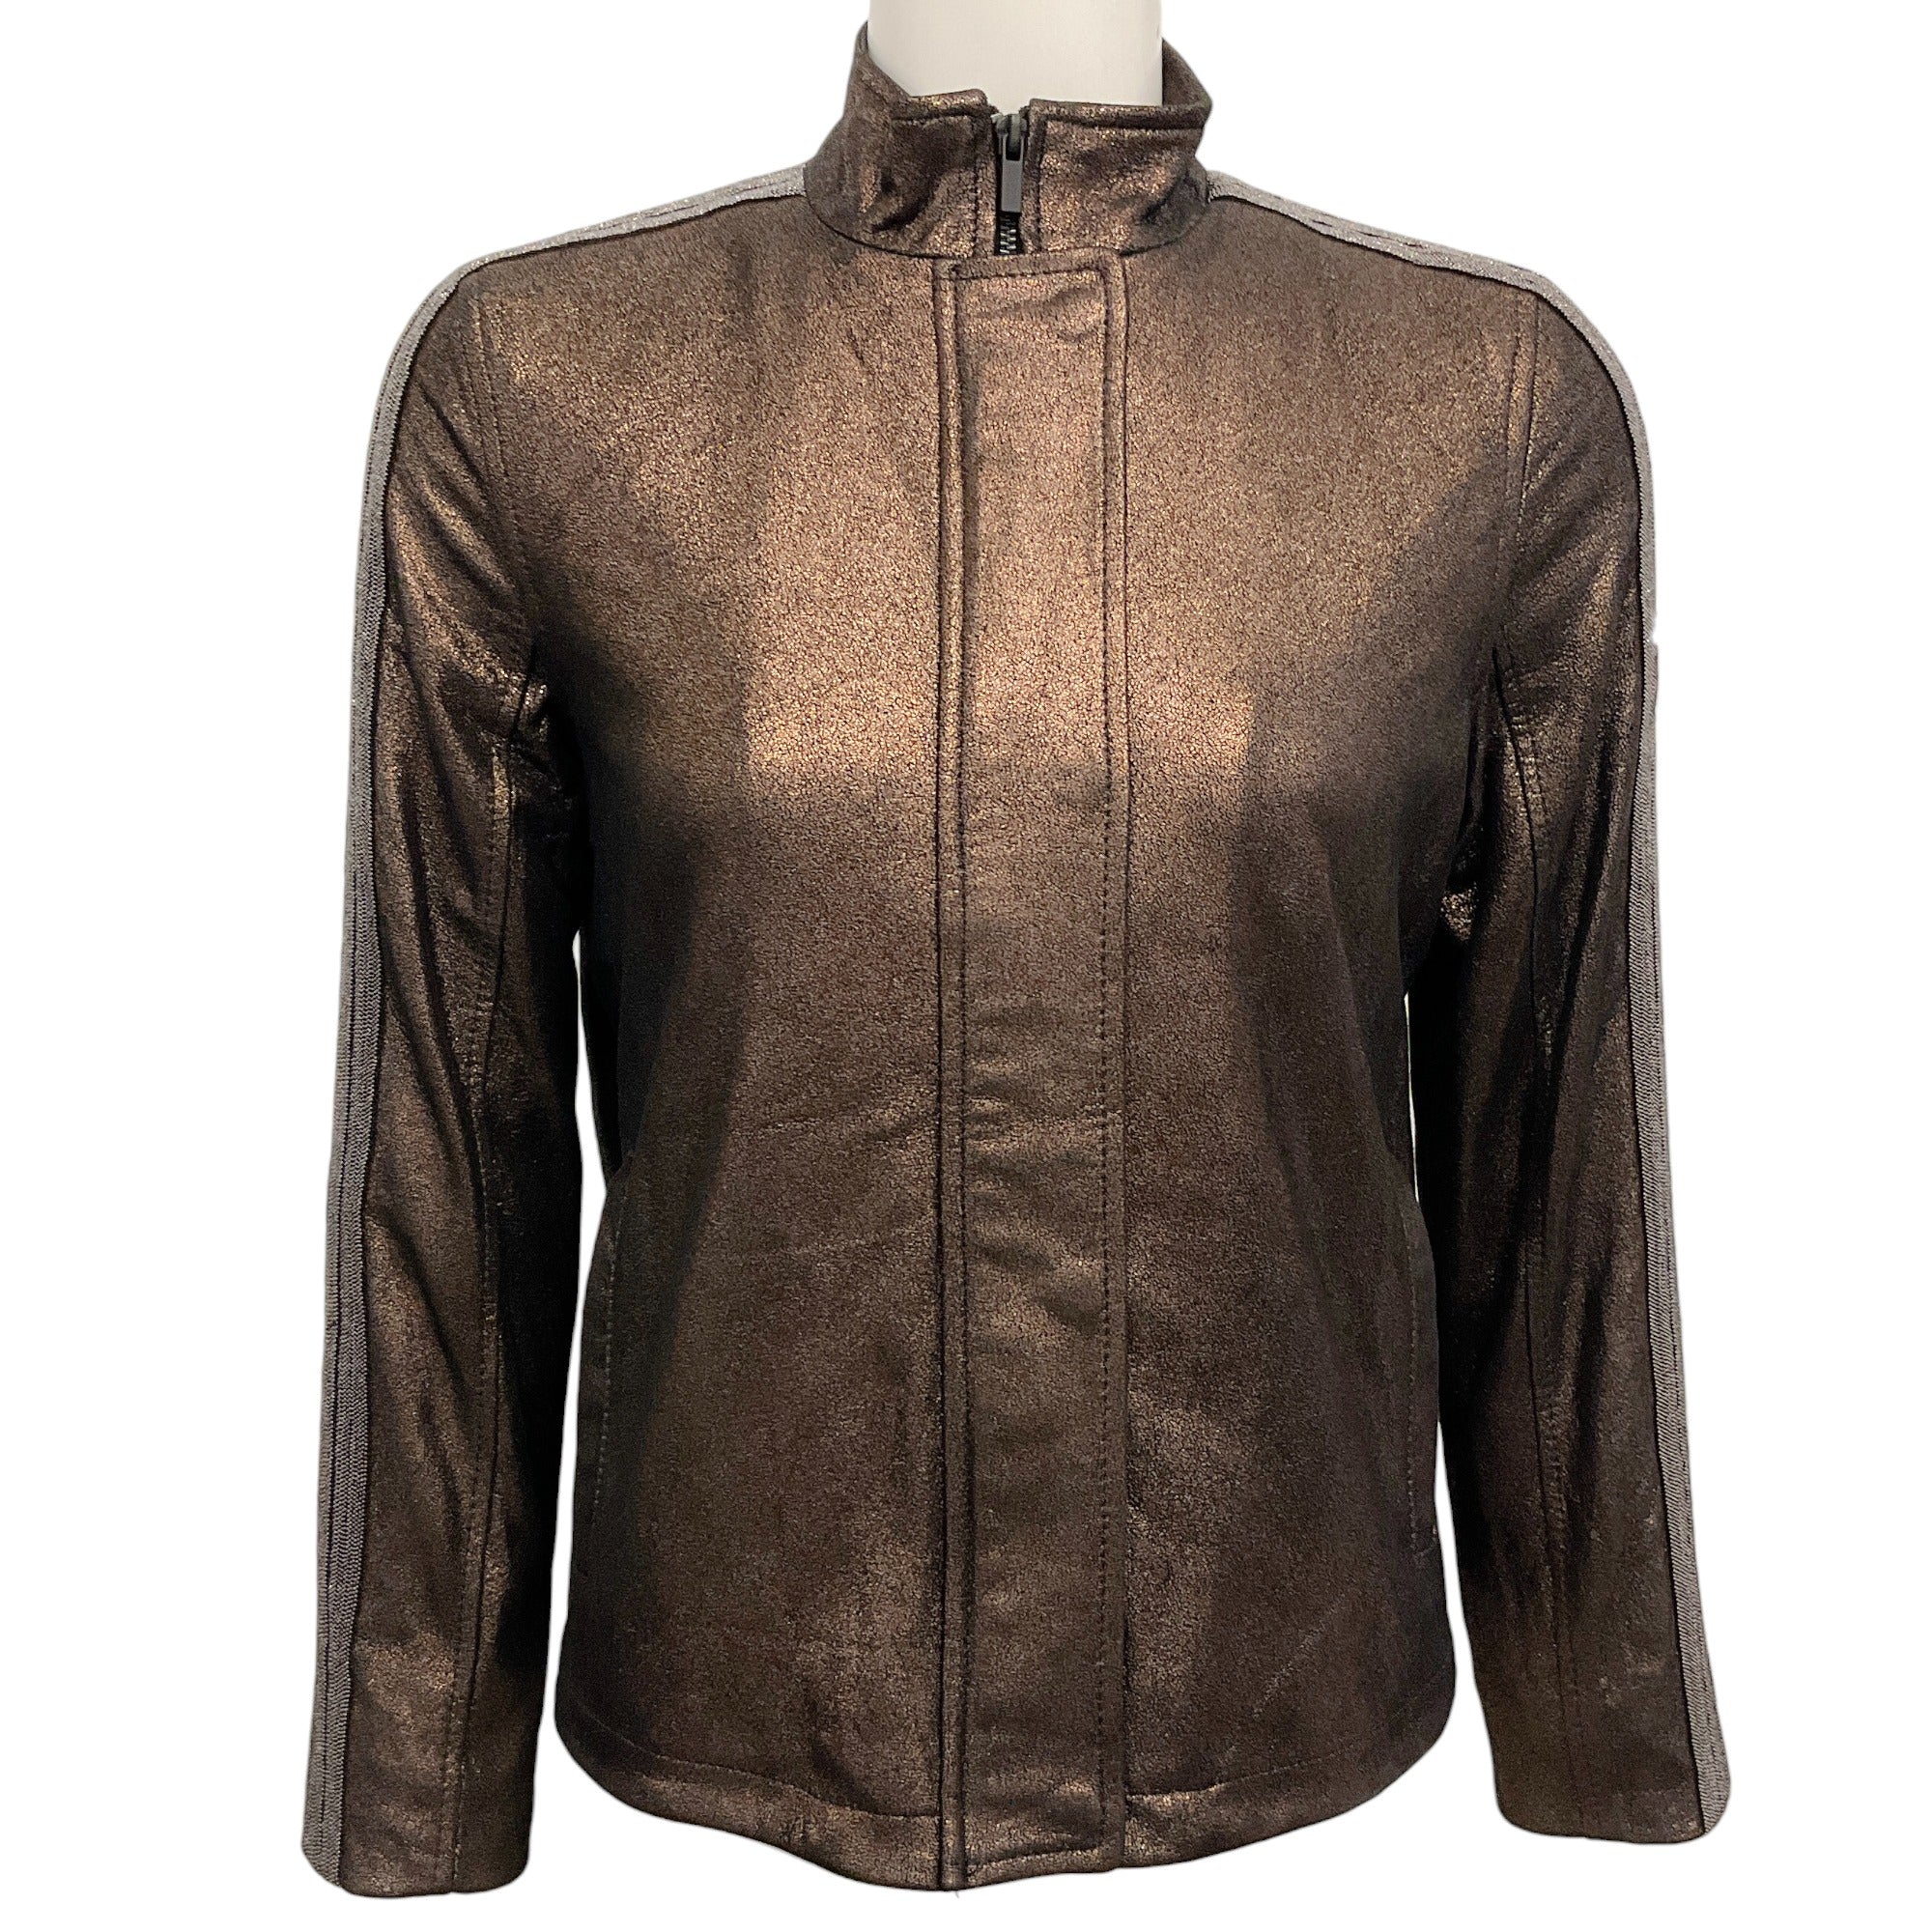 Neiman Marcus Bronze Leather Jacket with Monili Detail